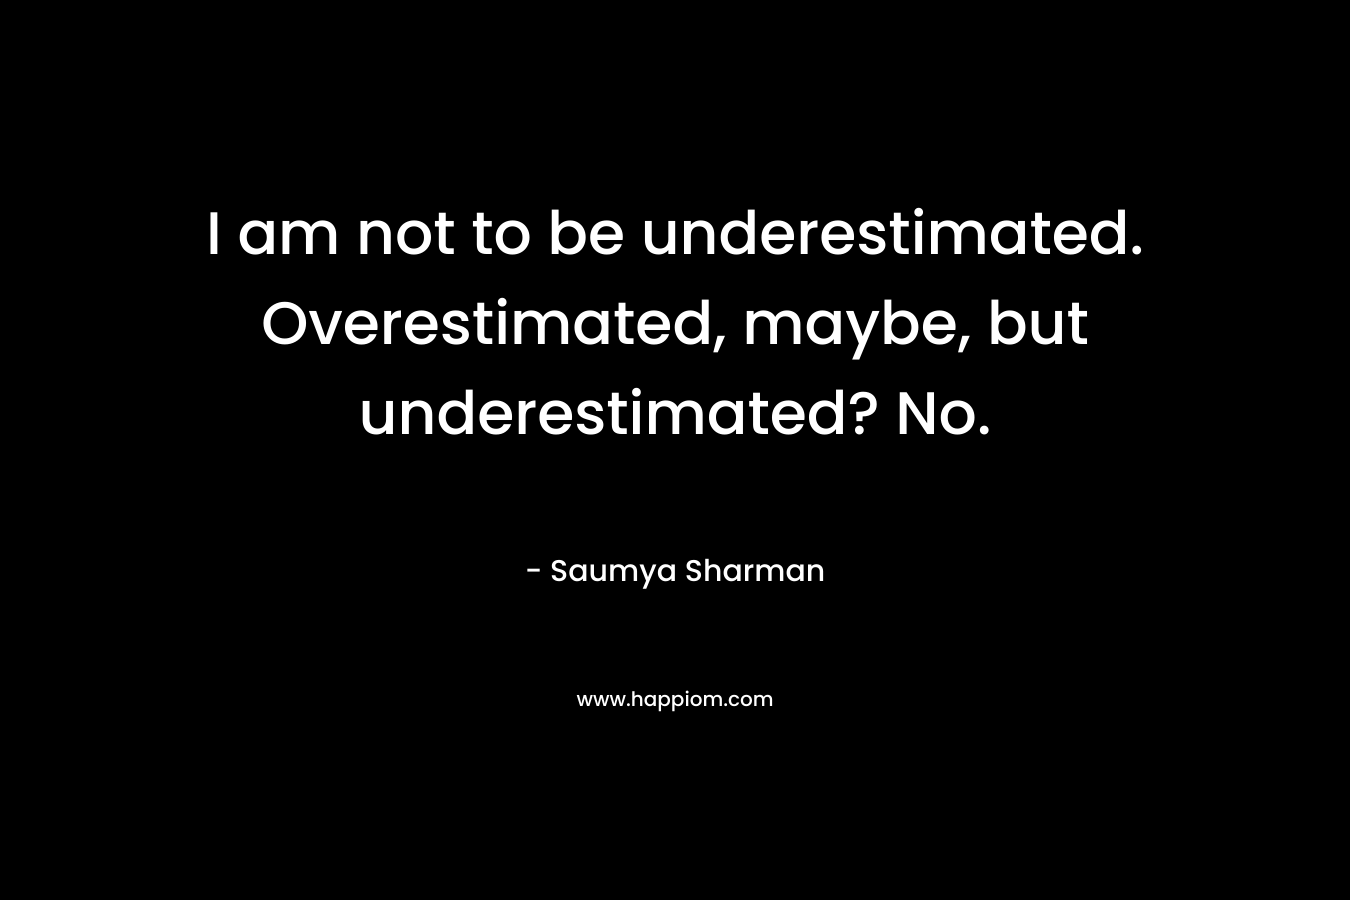 I am not to be underestimated. Overestimated, maybe, but underestimated? No.